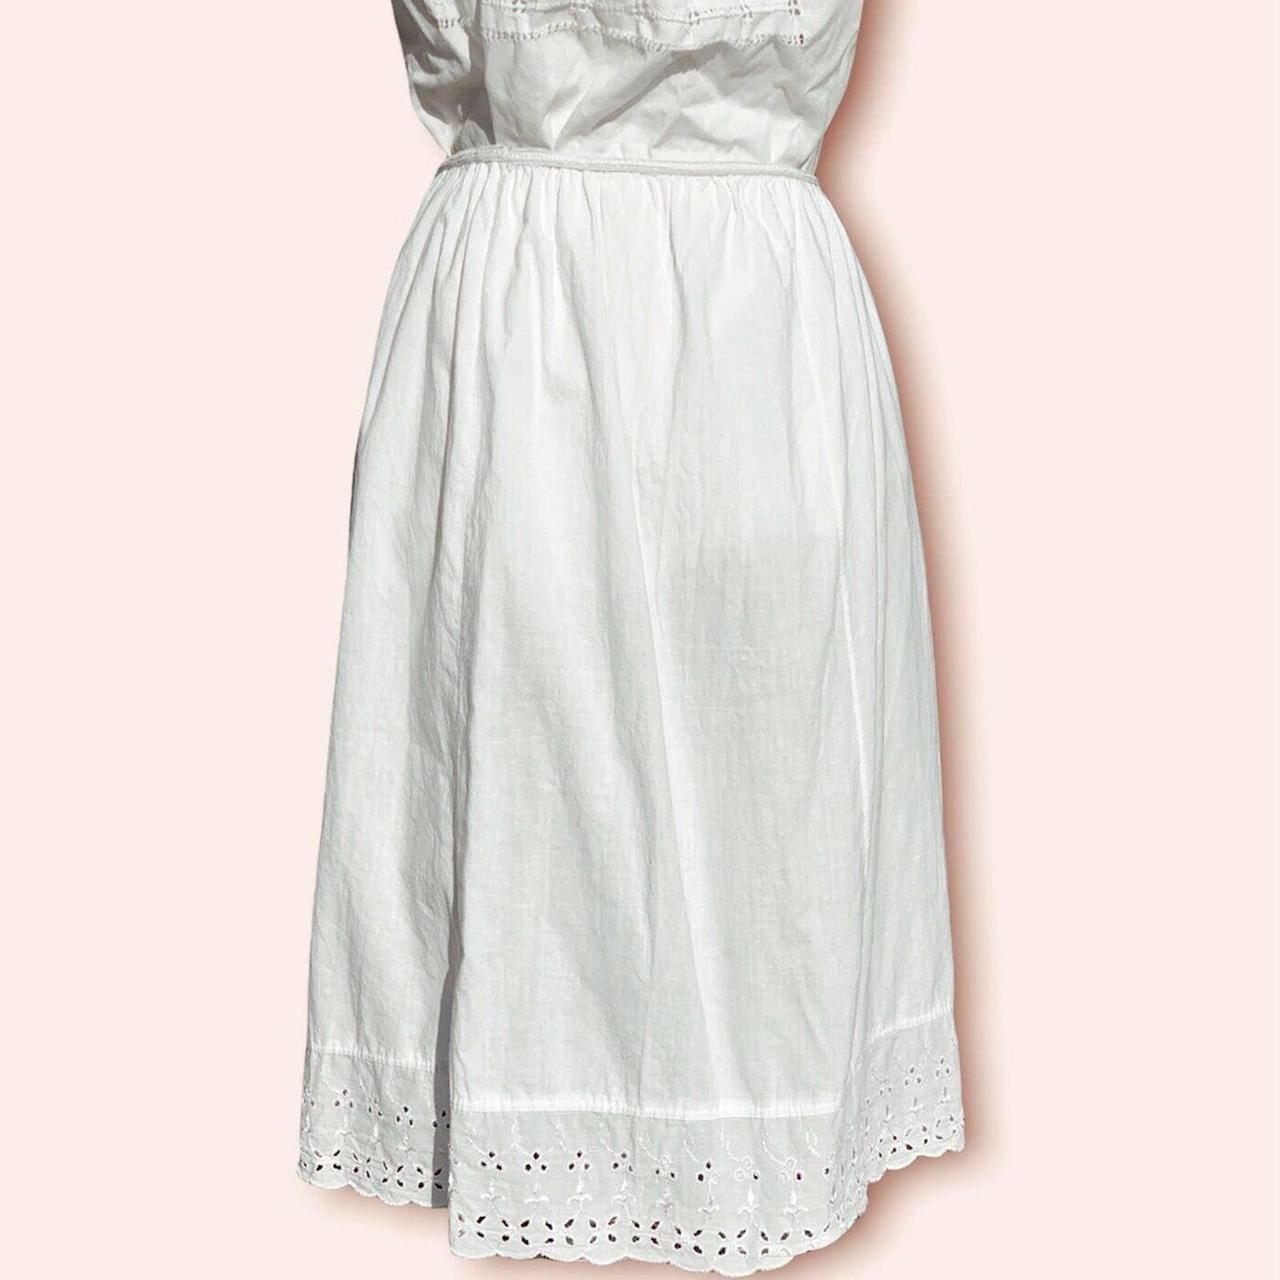 Product Image 2 - Vintage Eyelet Slip Skirt White